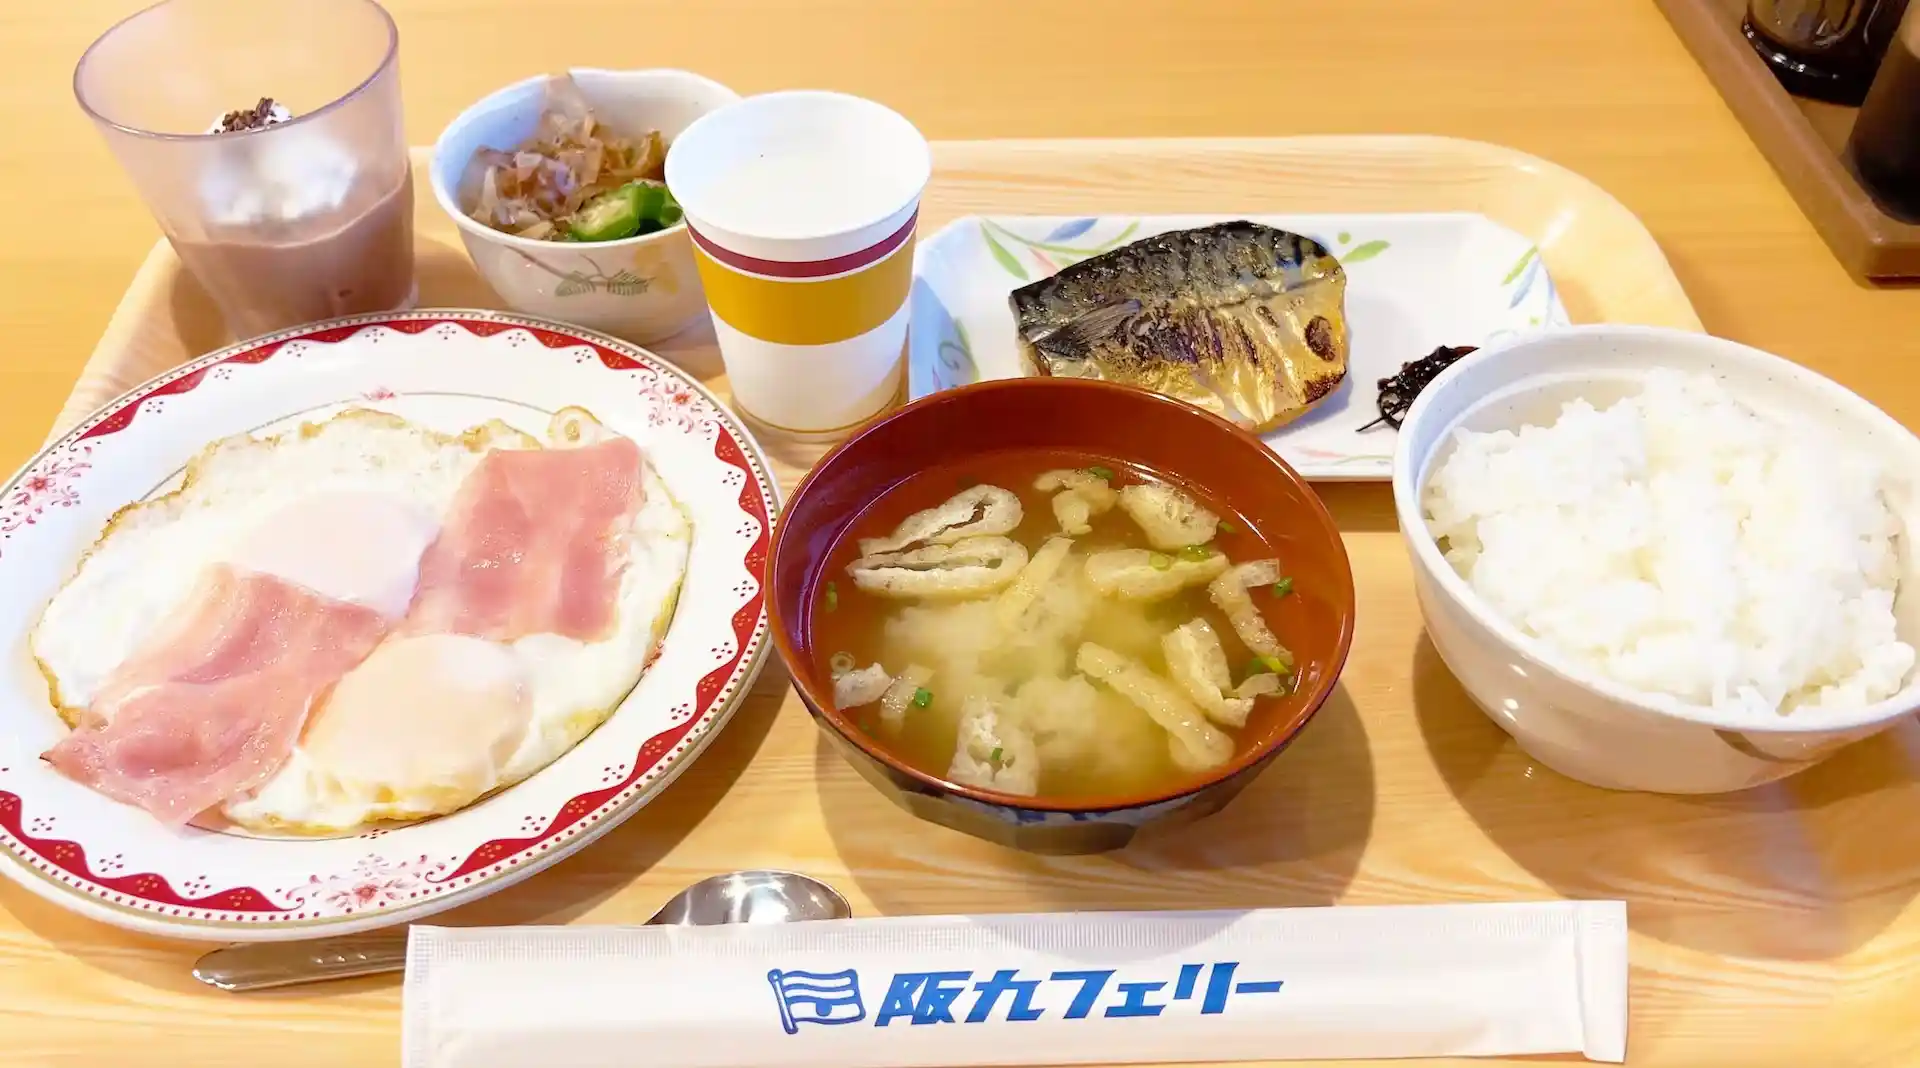 Breakfast food at the Hankyu Ferry Settsu onboard restaurant